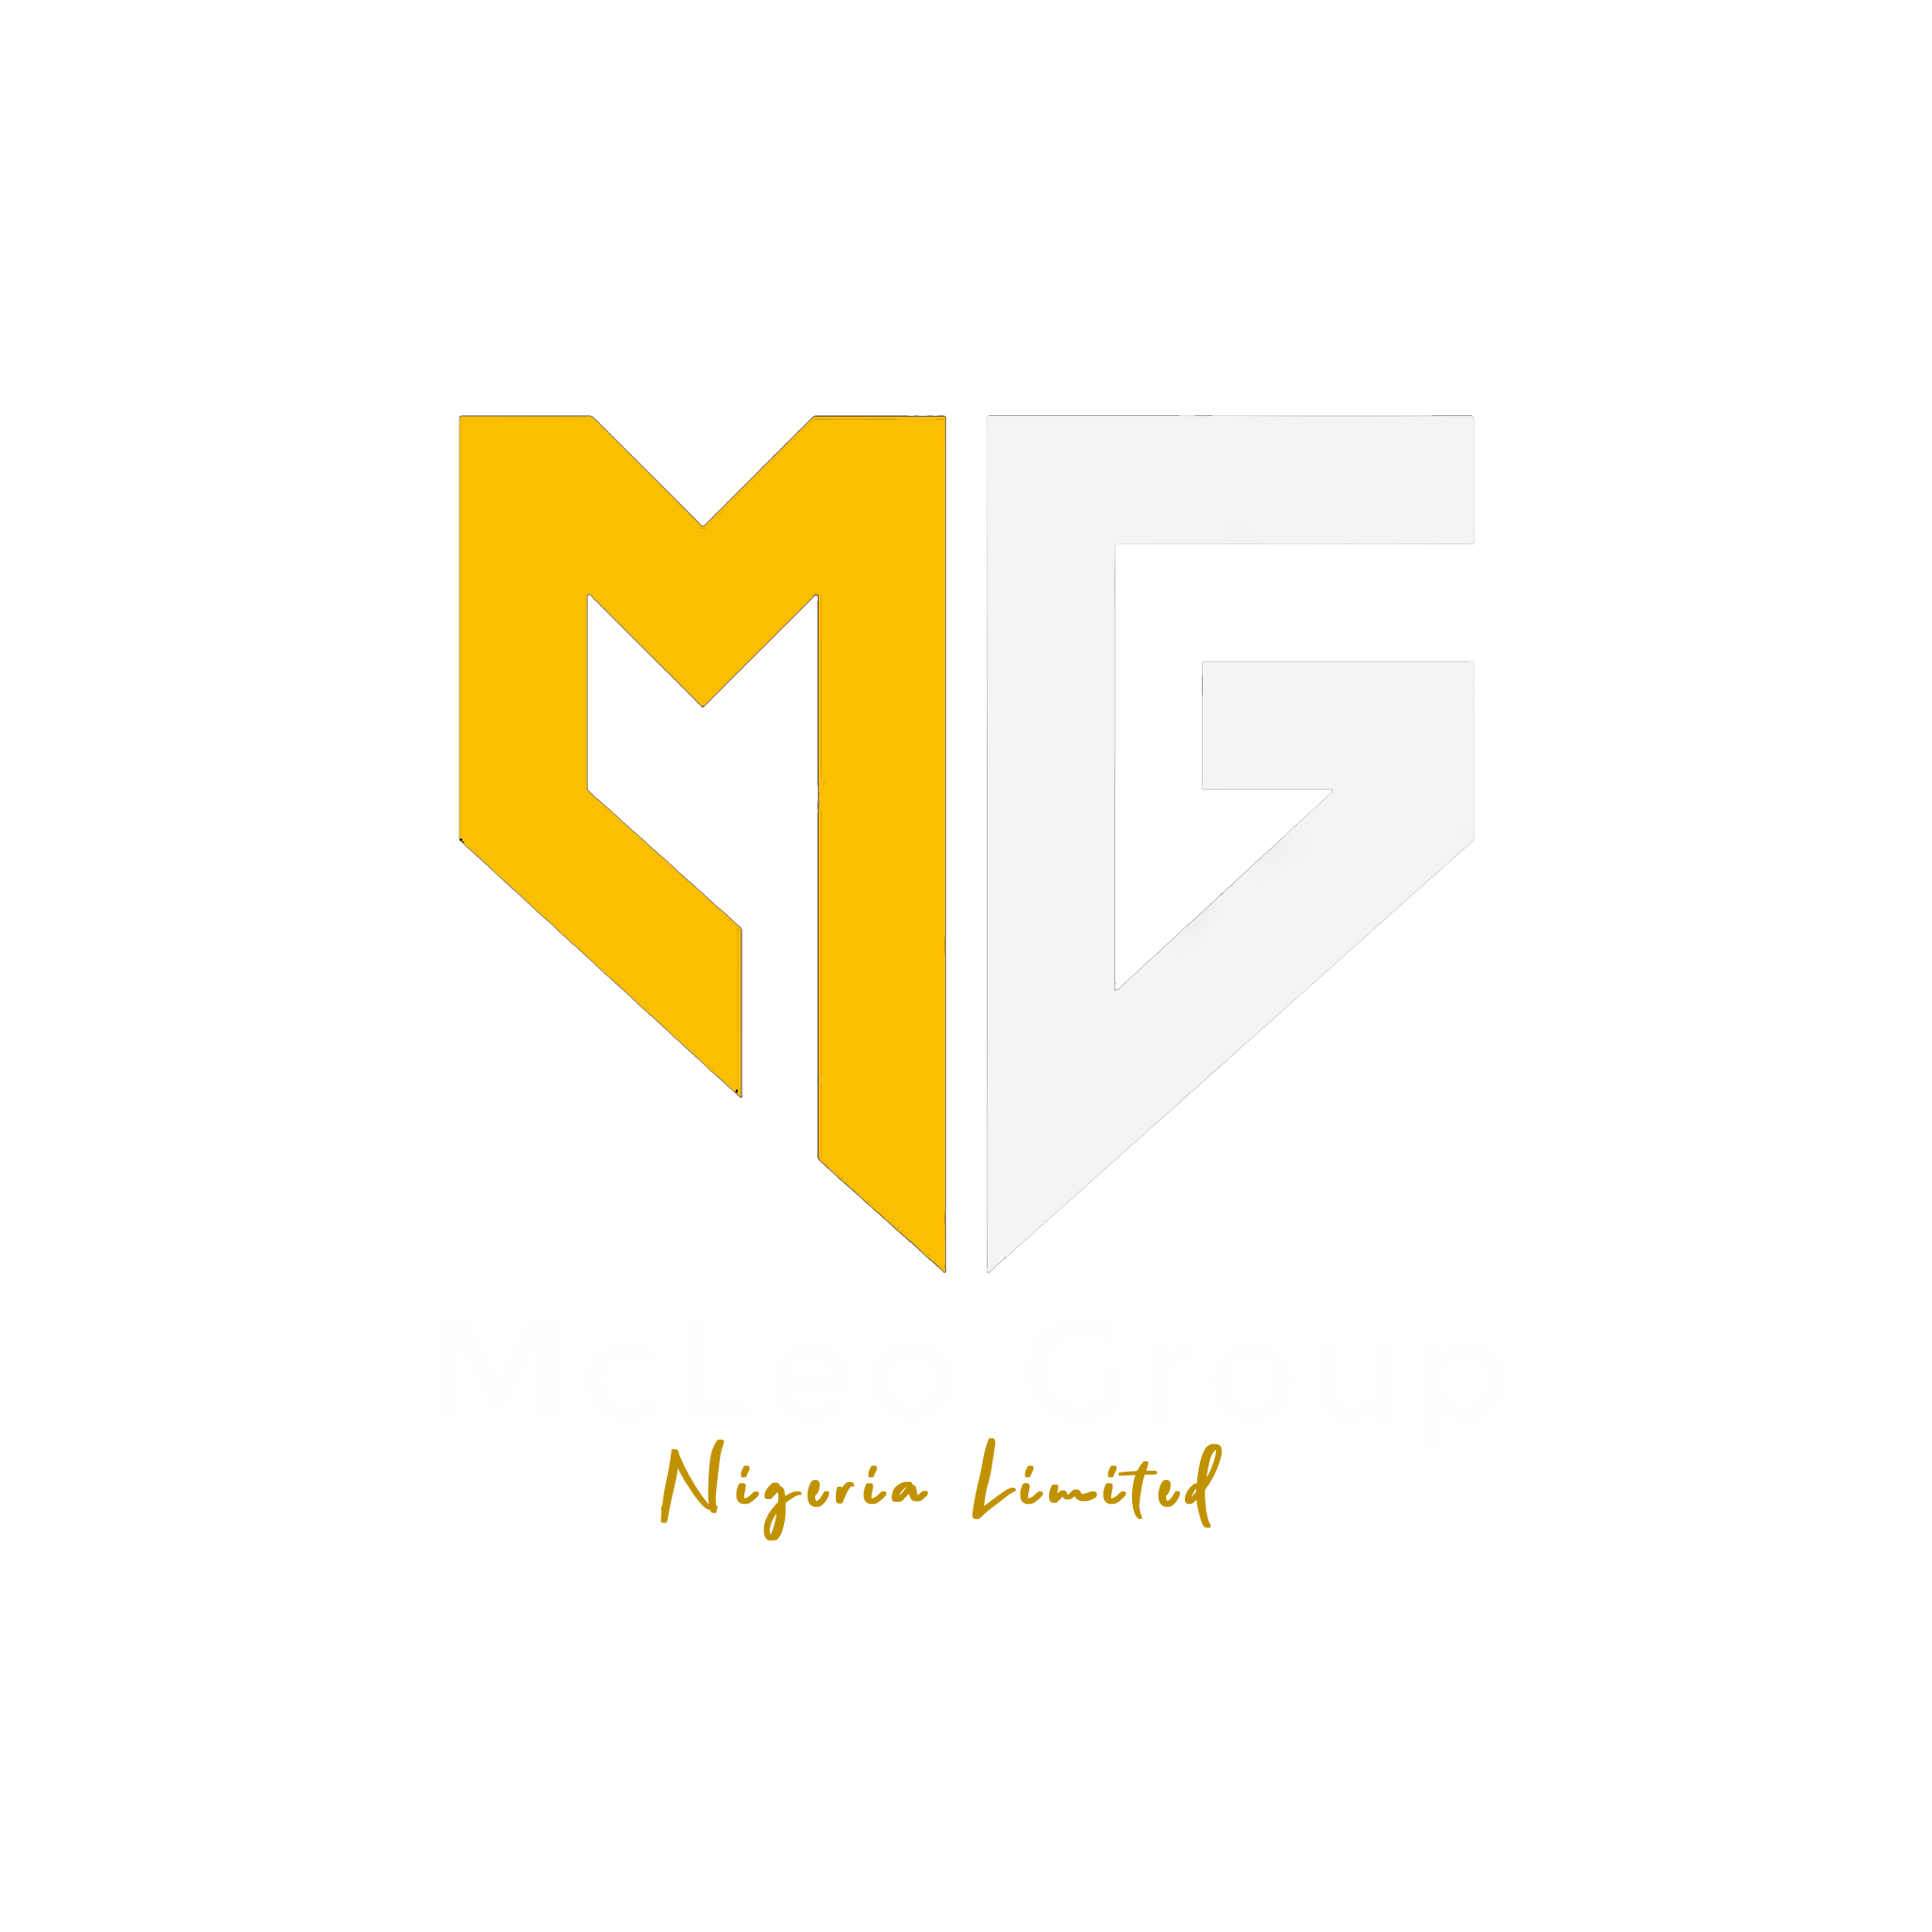 McLeo Group